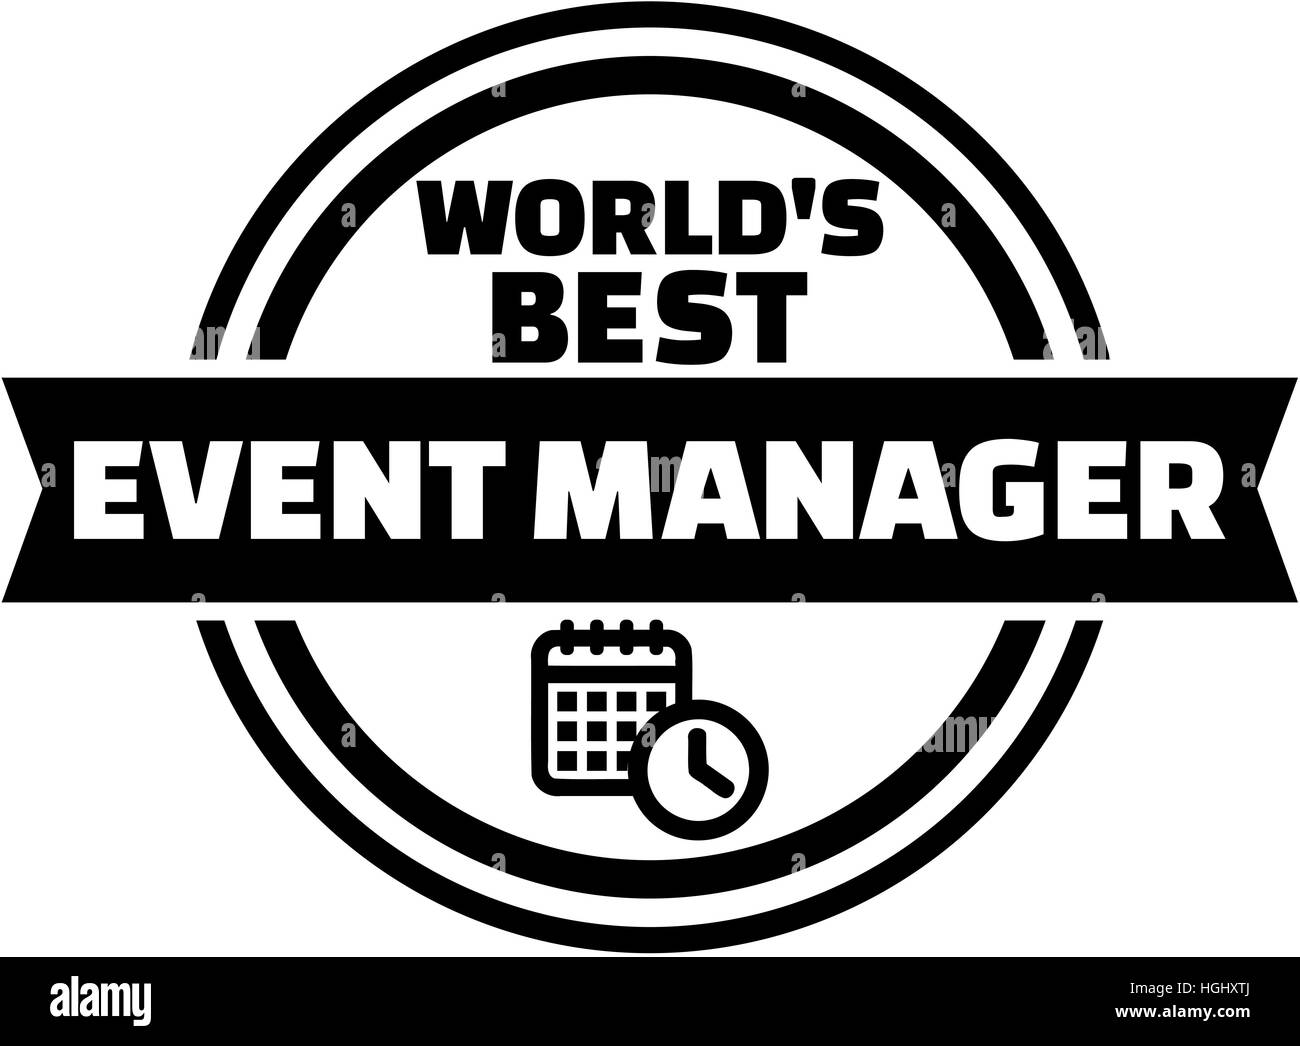 World's best event manager Banque D'Images